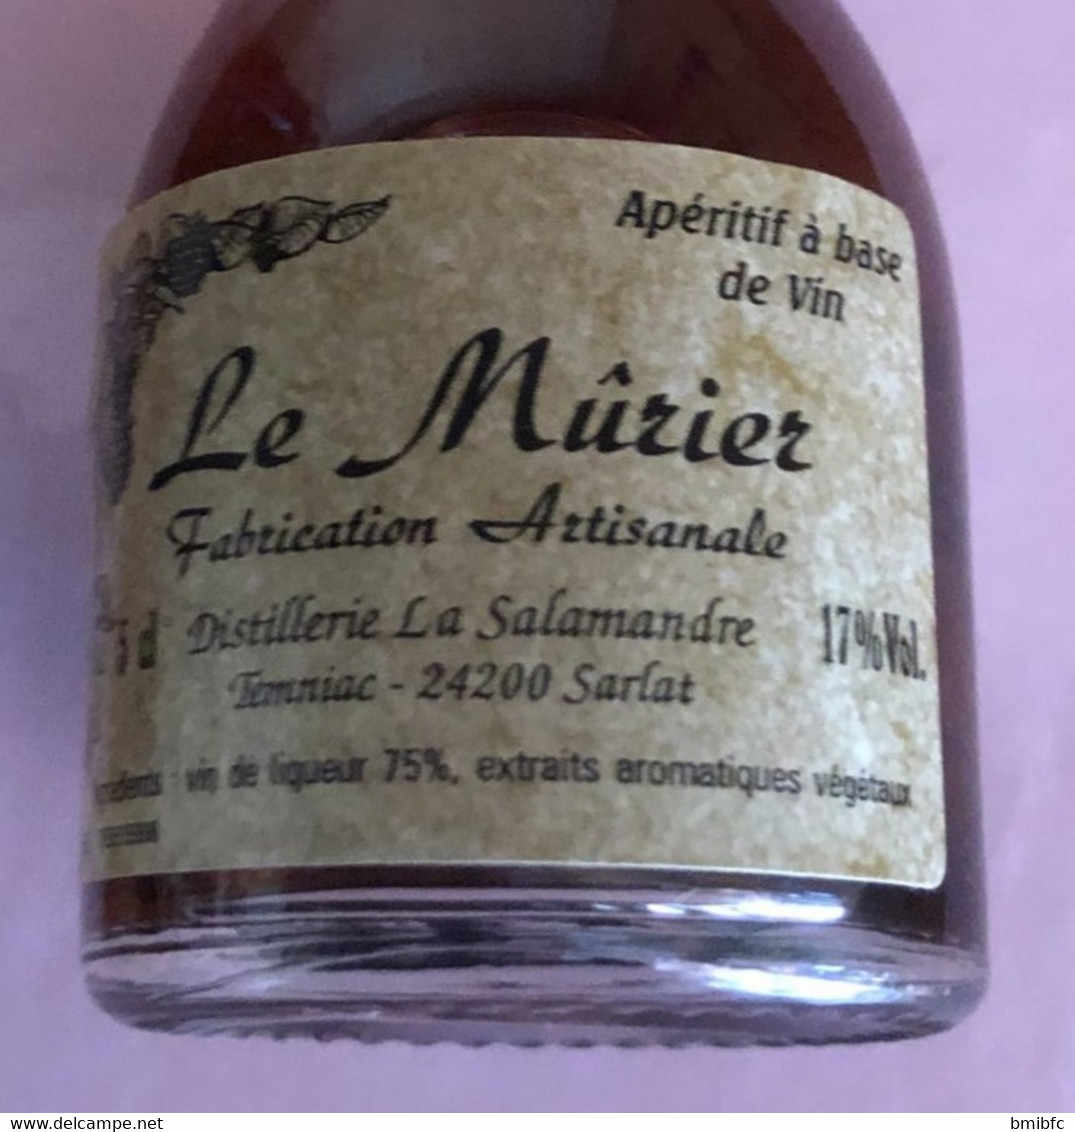 Le  Mûrier Fabrication Artisanale Distillerie La Salamandre  -  Temniac  - 24200 SARLAT - 5cl - 17% Vol - Miniature